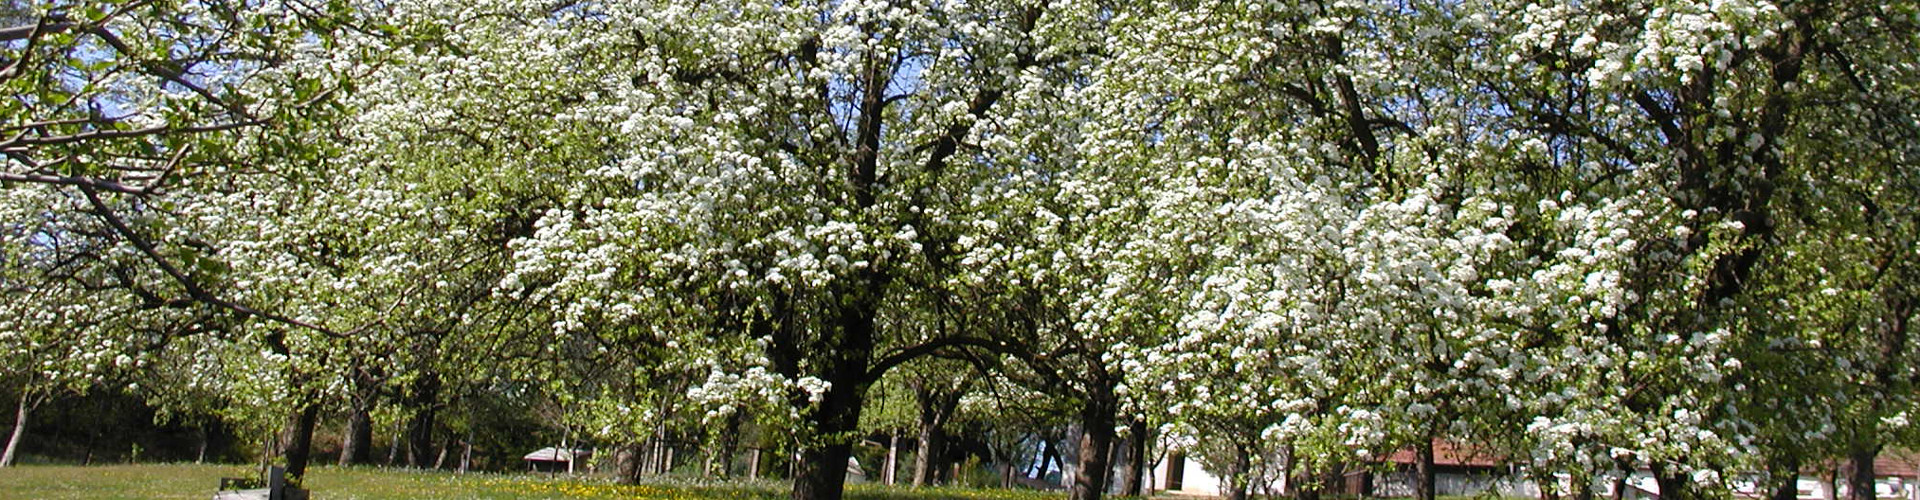 Obstgarten in Blüte